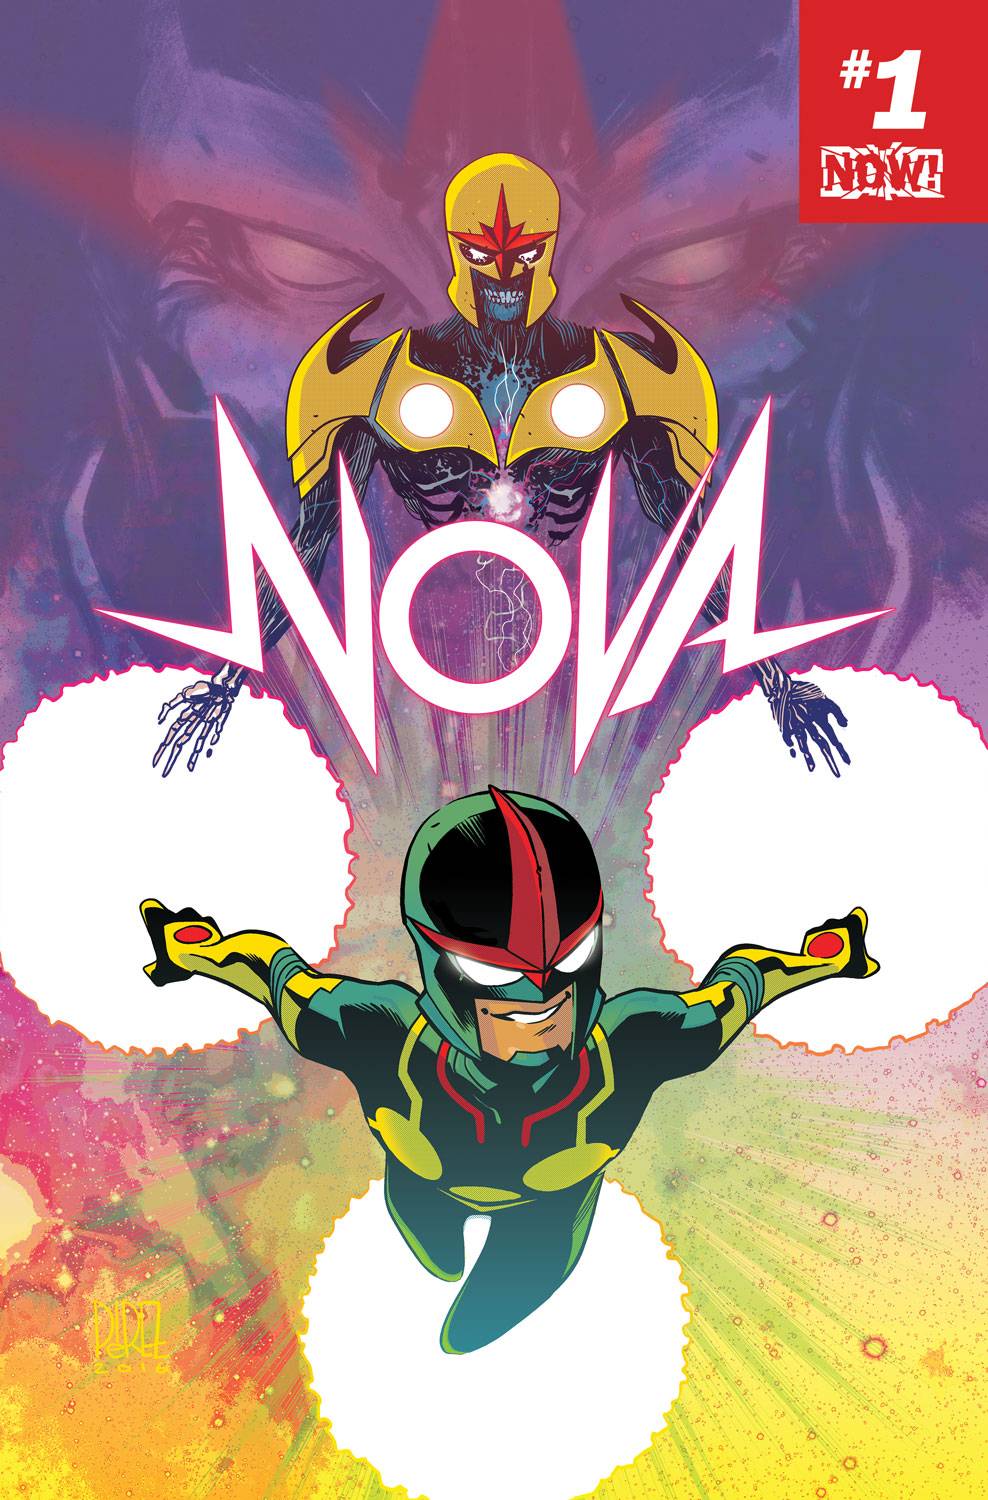 Nova (7th Series) 1 Comic Book NM